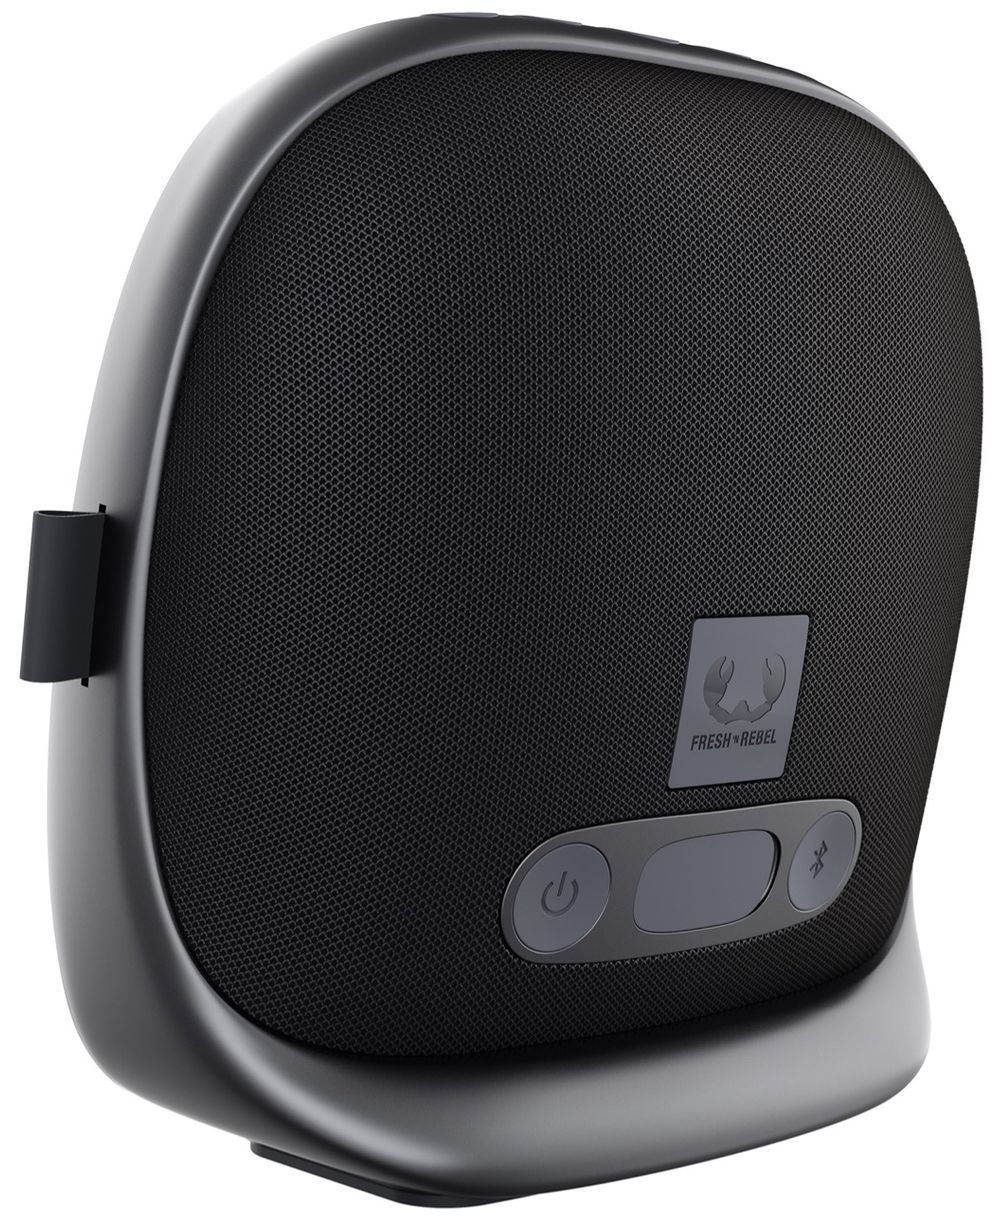 Soul Bluetooth Lautsprecher Spritzwassergeschützt IPX5 (Grau) 